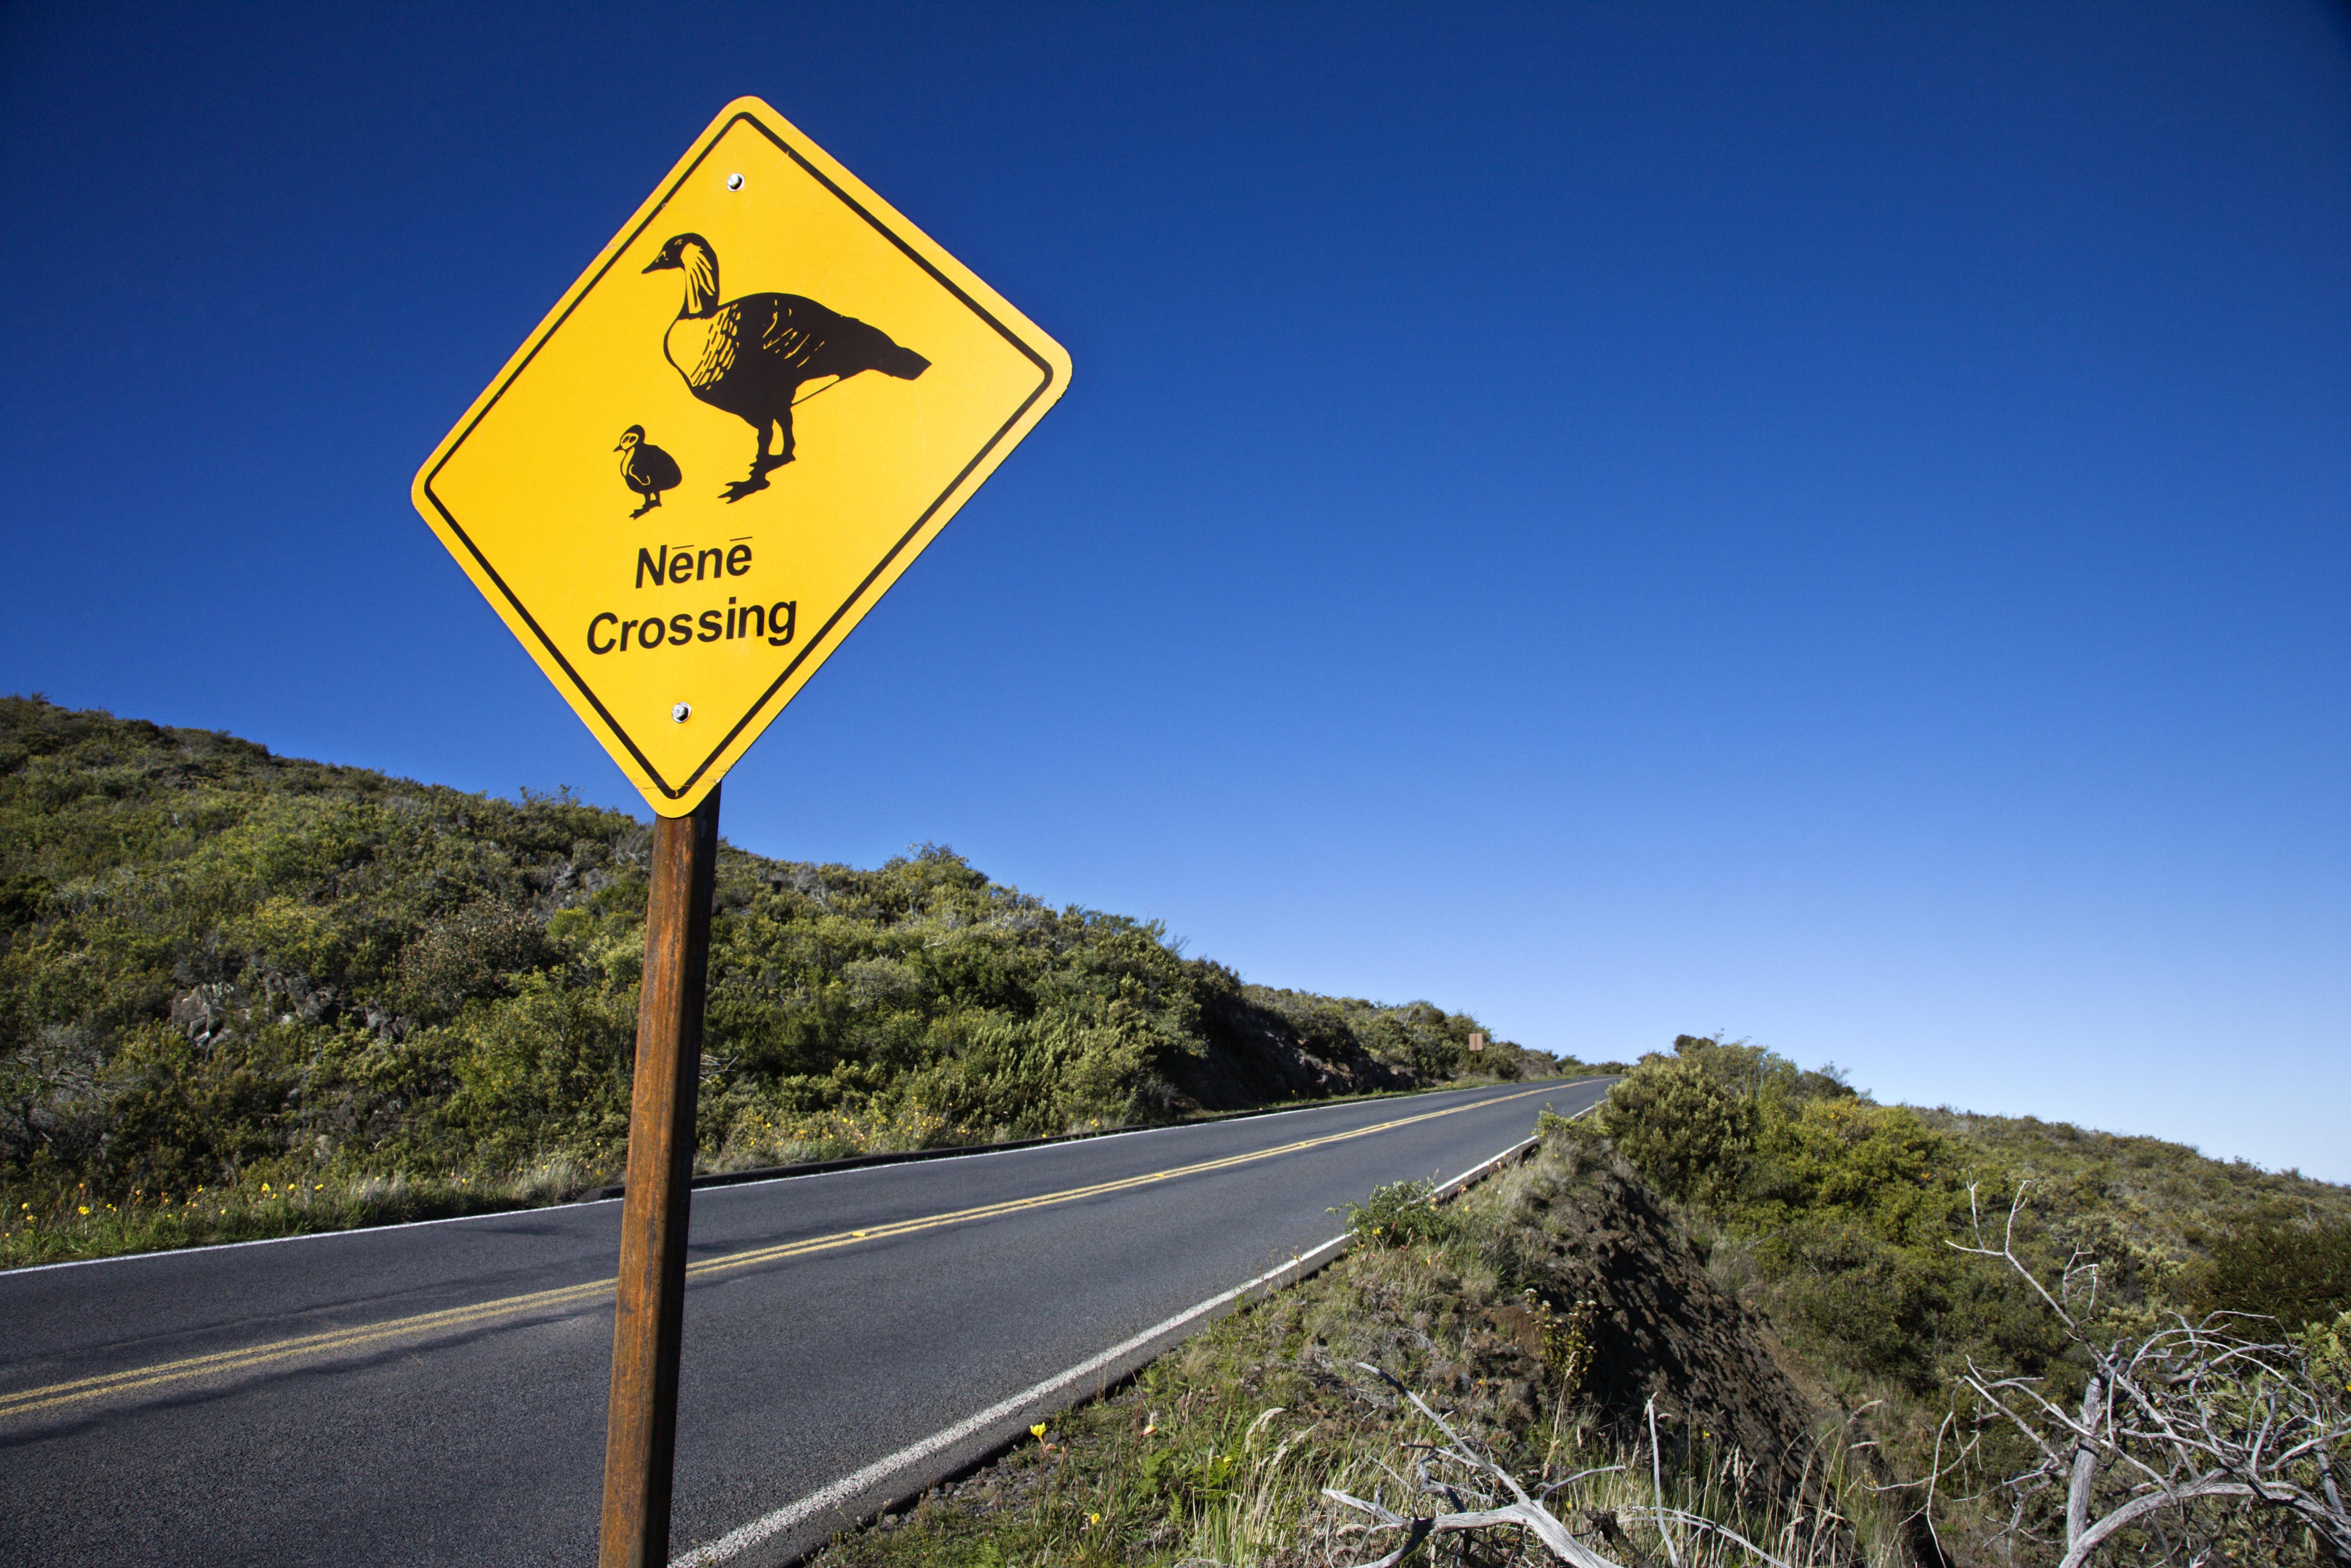 Shot of "Nene Crossing" road sign in Haleakala National Park, Maui, Hawaii.